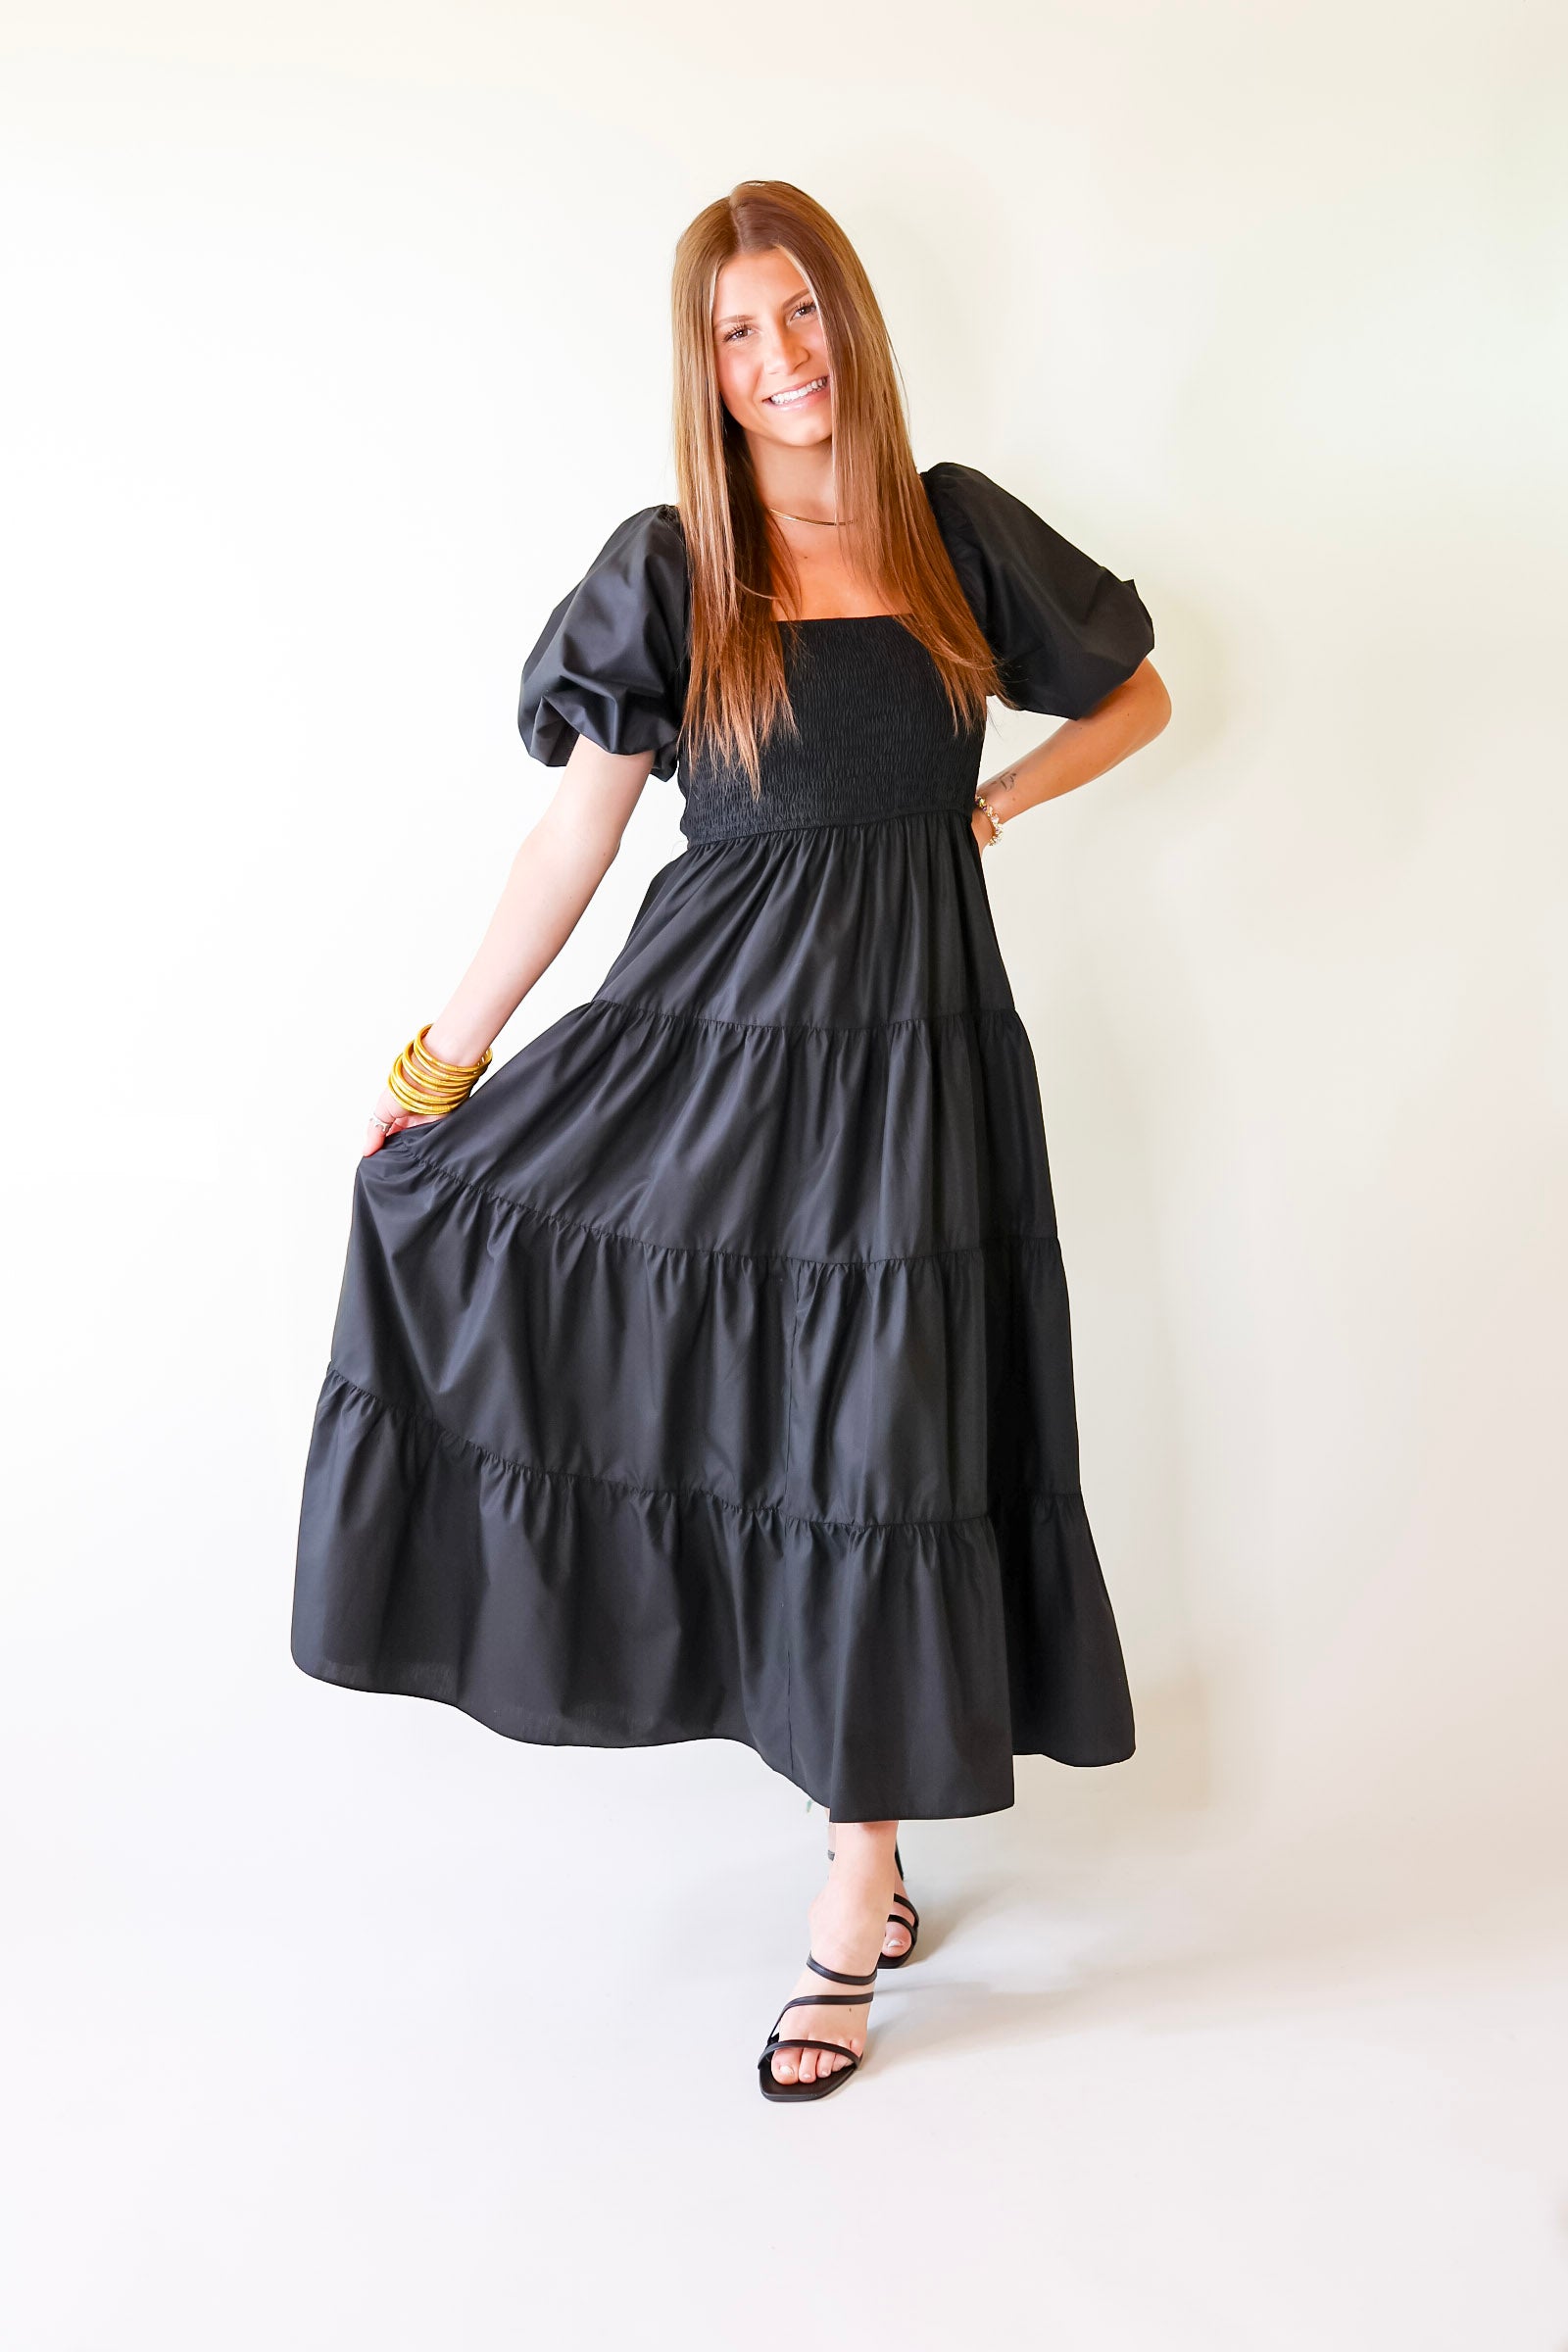 Santorini Sunshine Short Balloon Sleeve Maxi Dress in Black - Giddy Up Glamour Boutique